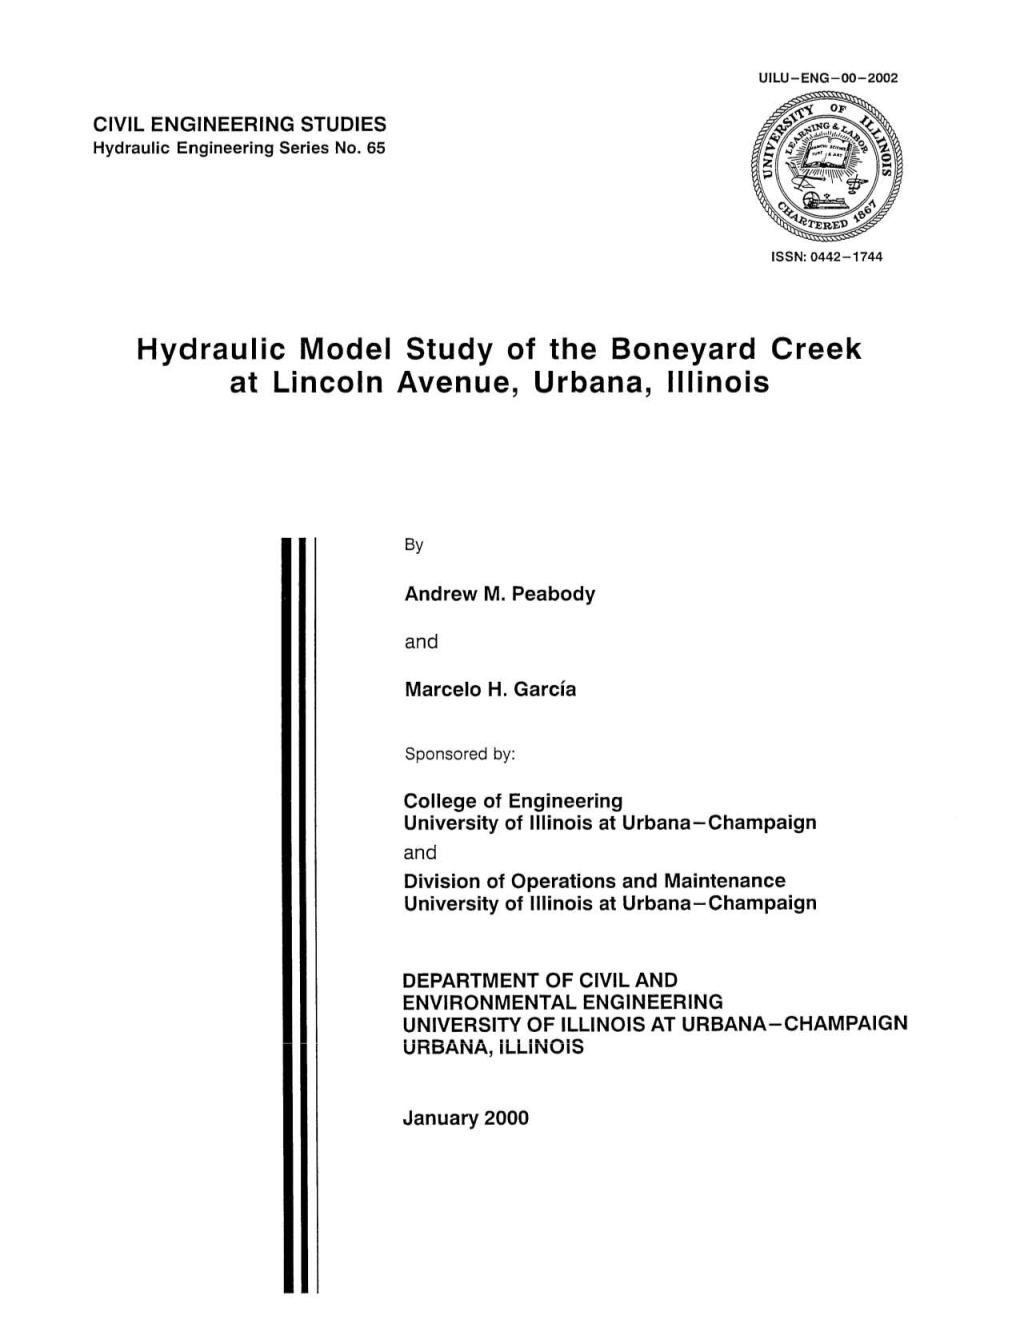 Hydraulic Model Study of the Boneyard Creek at Lincoln Avenue, Urbana, Illinois